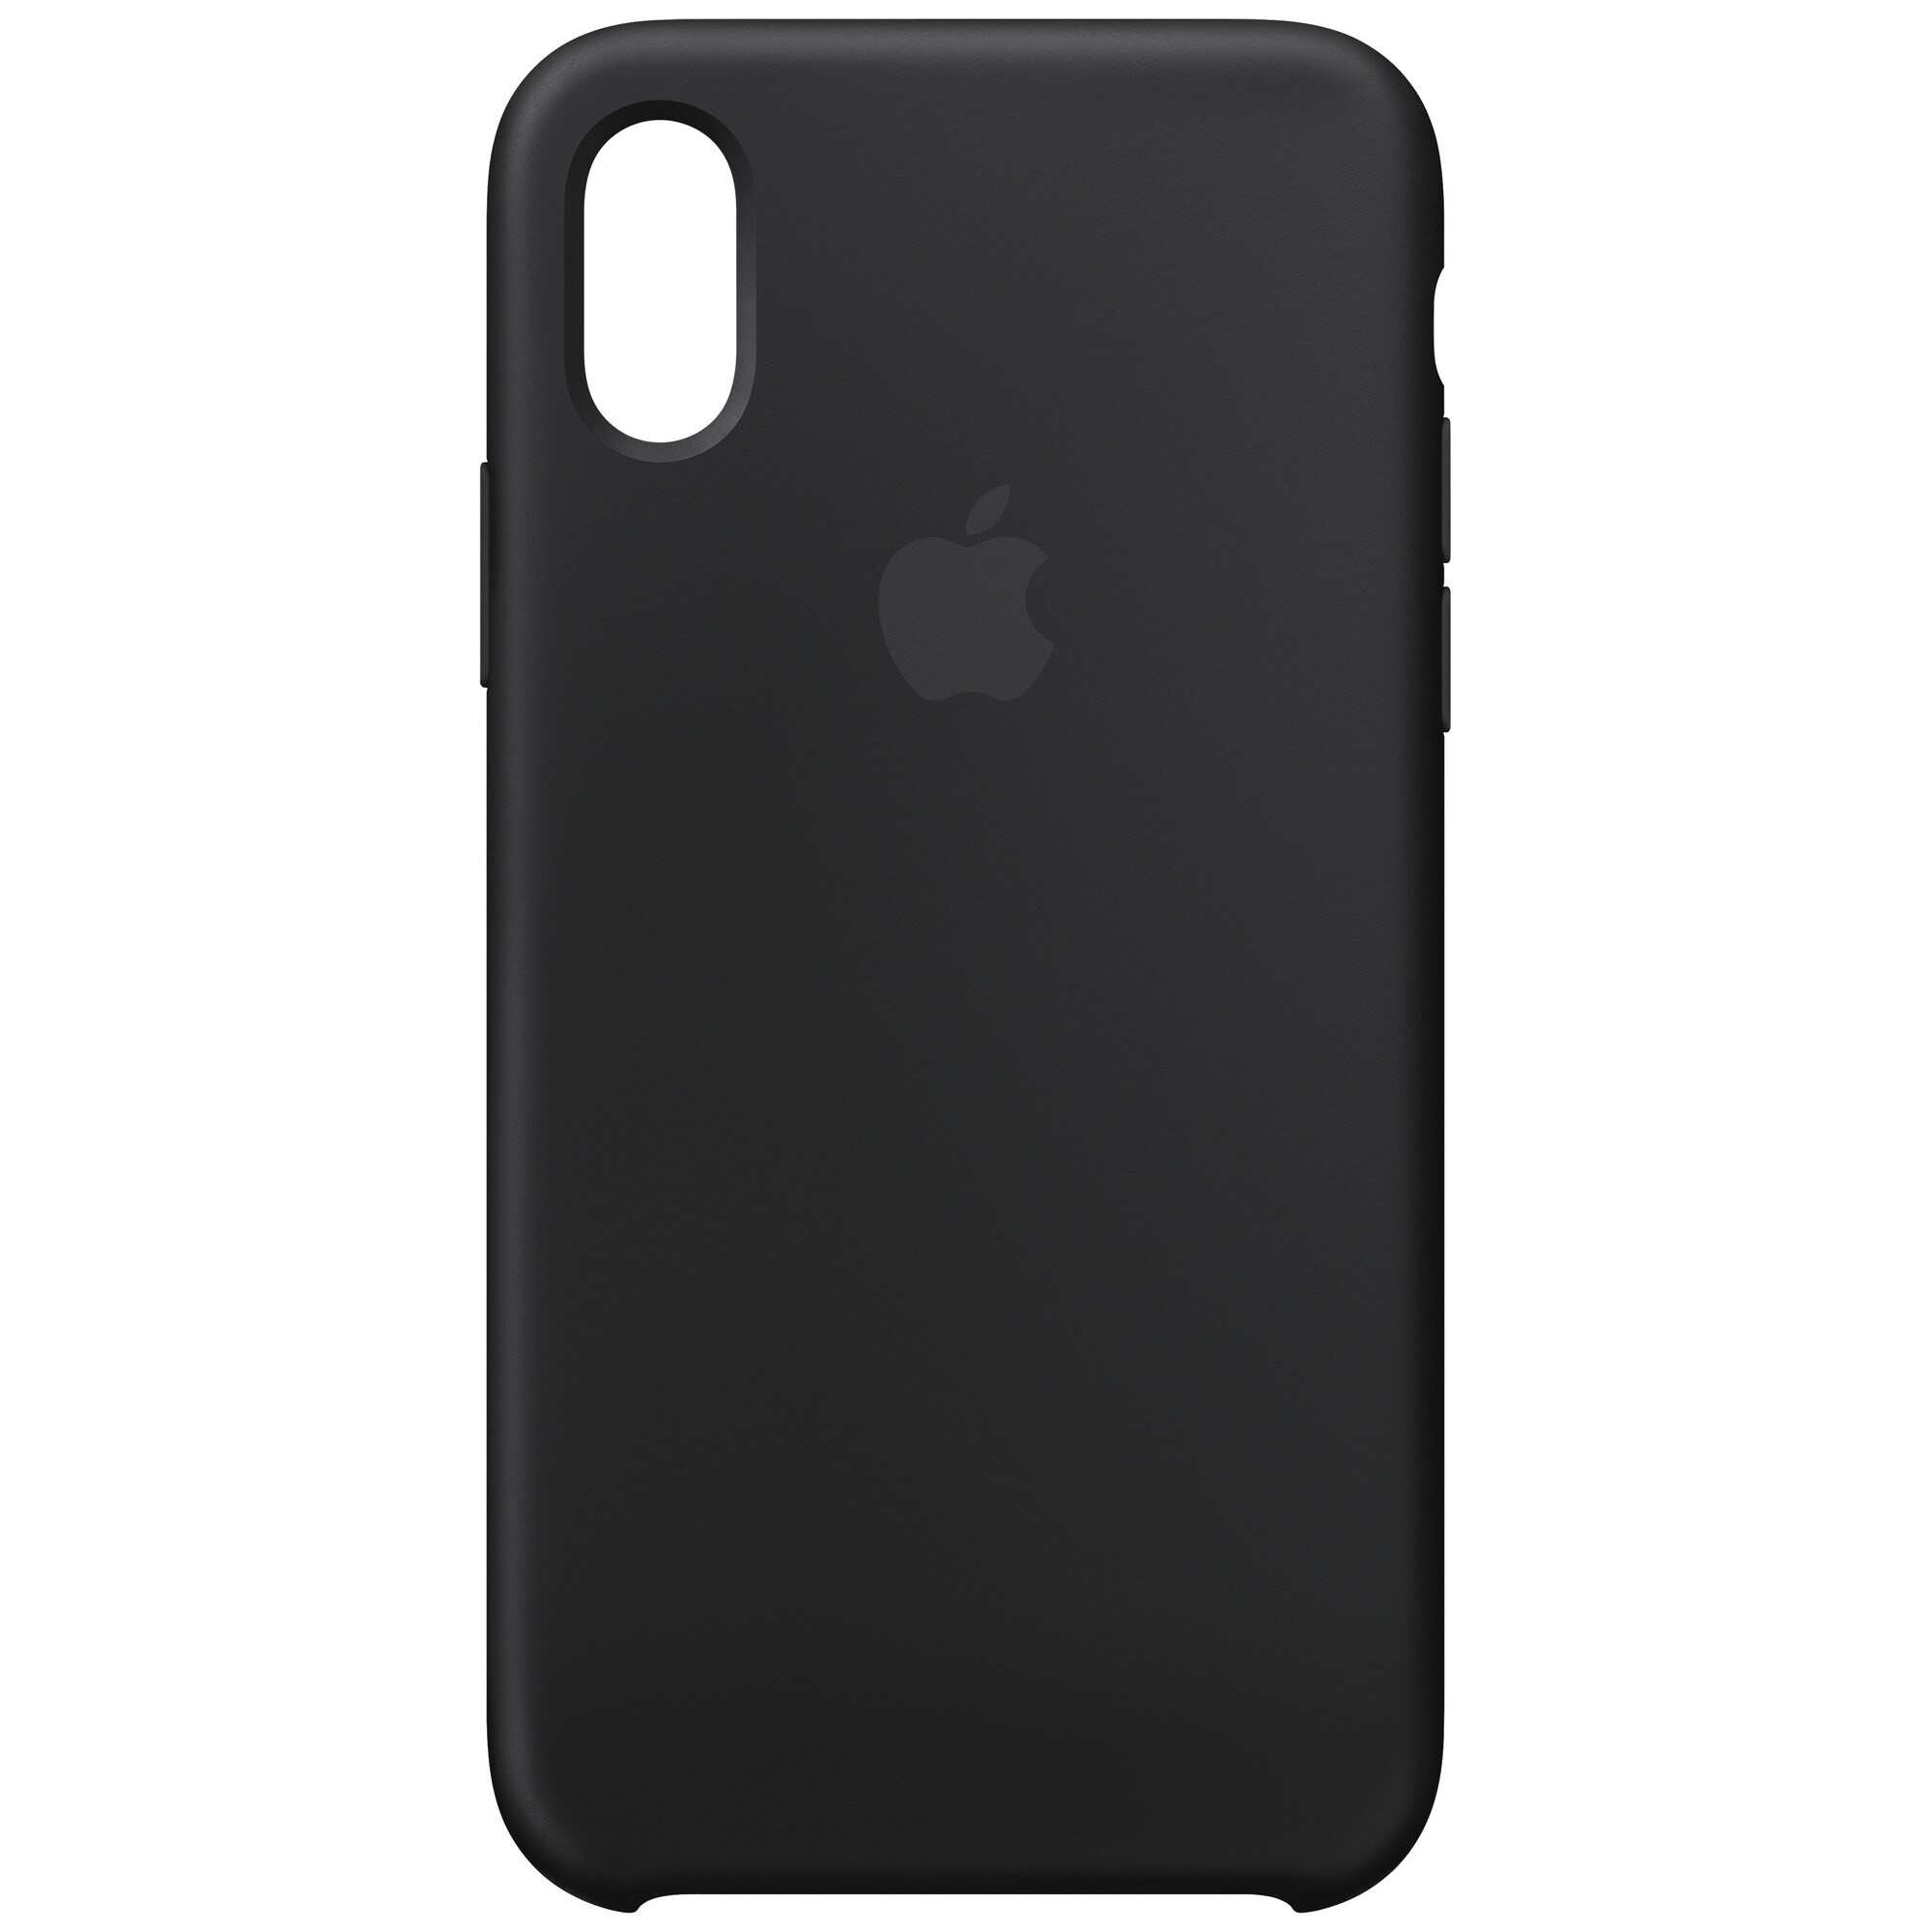 iPhone Xs silikondeksel (sort) - Elkjøp